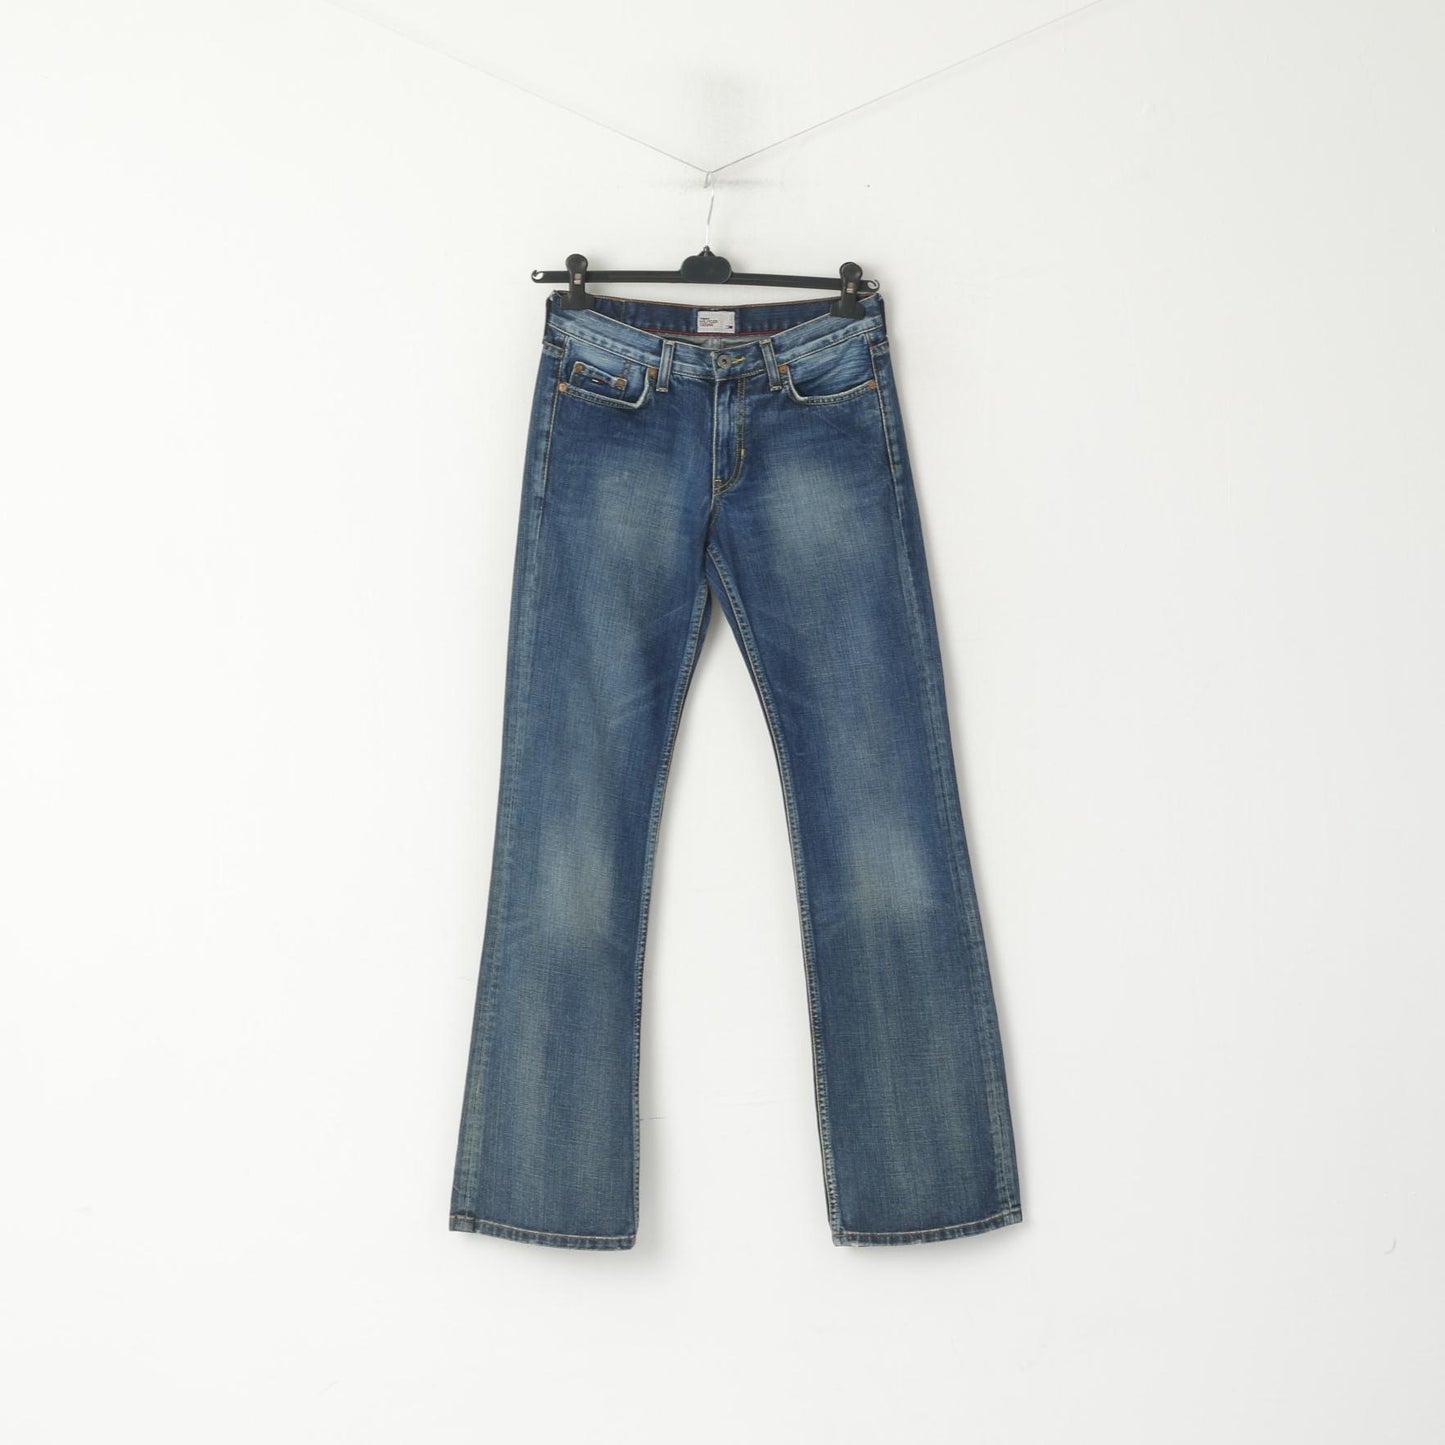 Tommy Hilfiger Denim femme 28 34 pantalon jean en coton bleu marine pantalon hipster bootcut